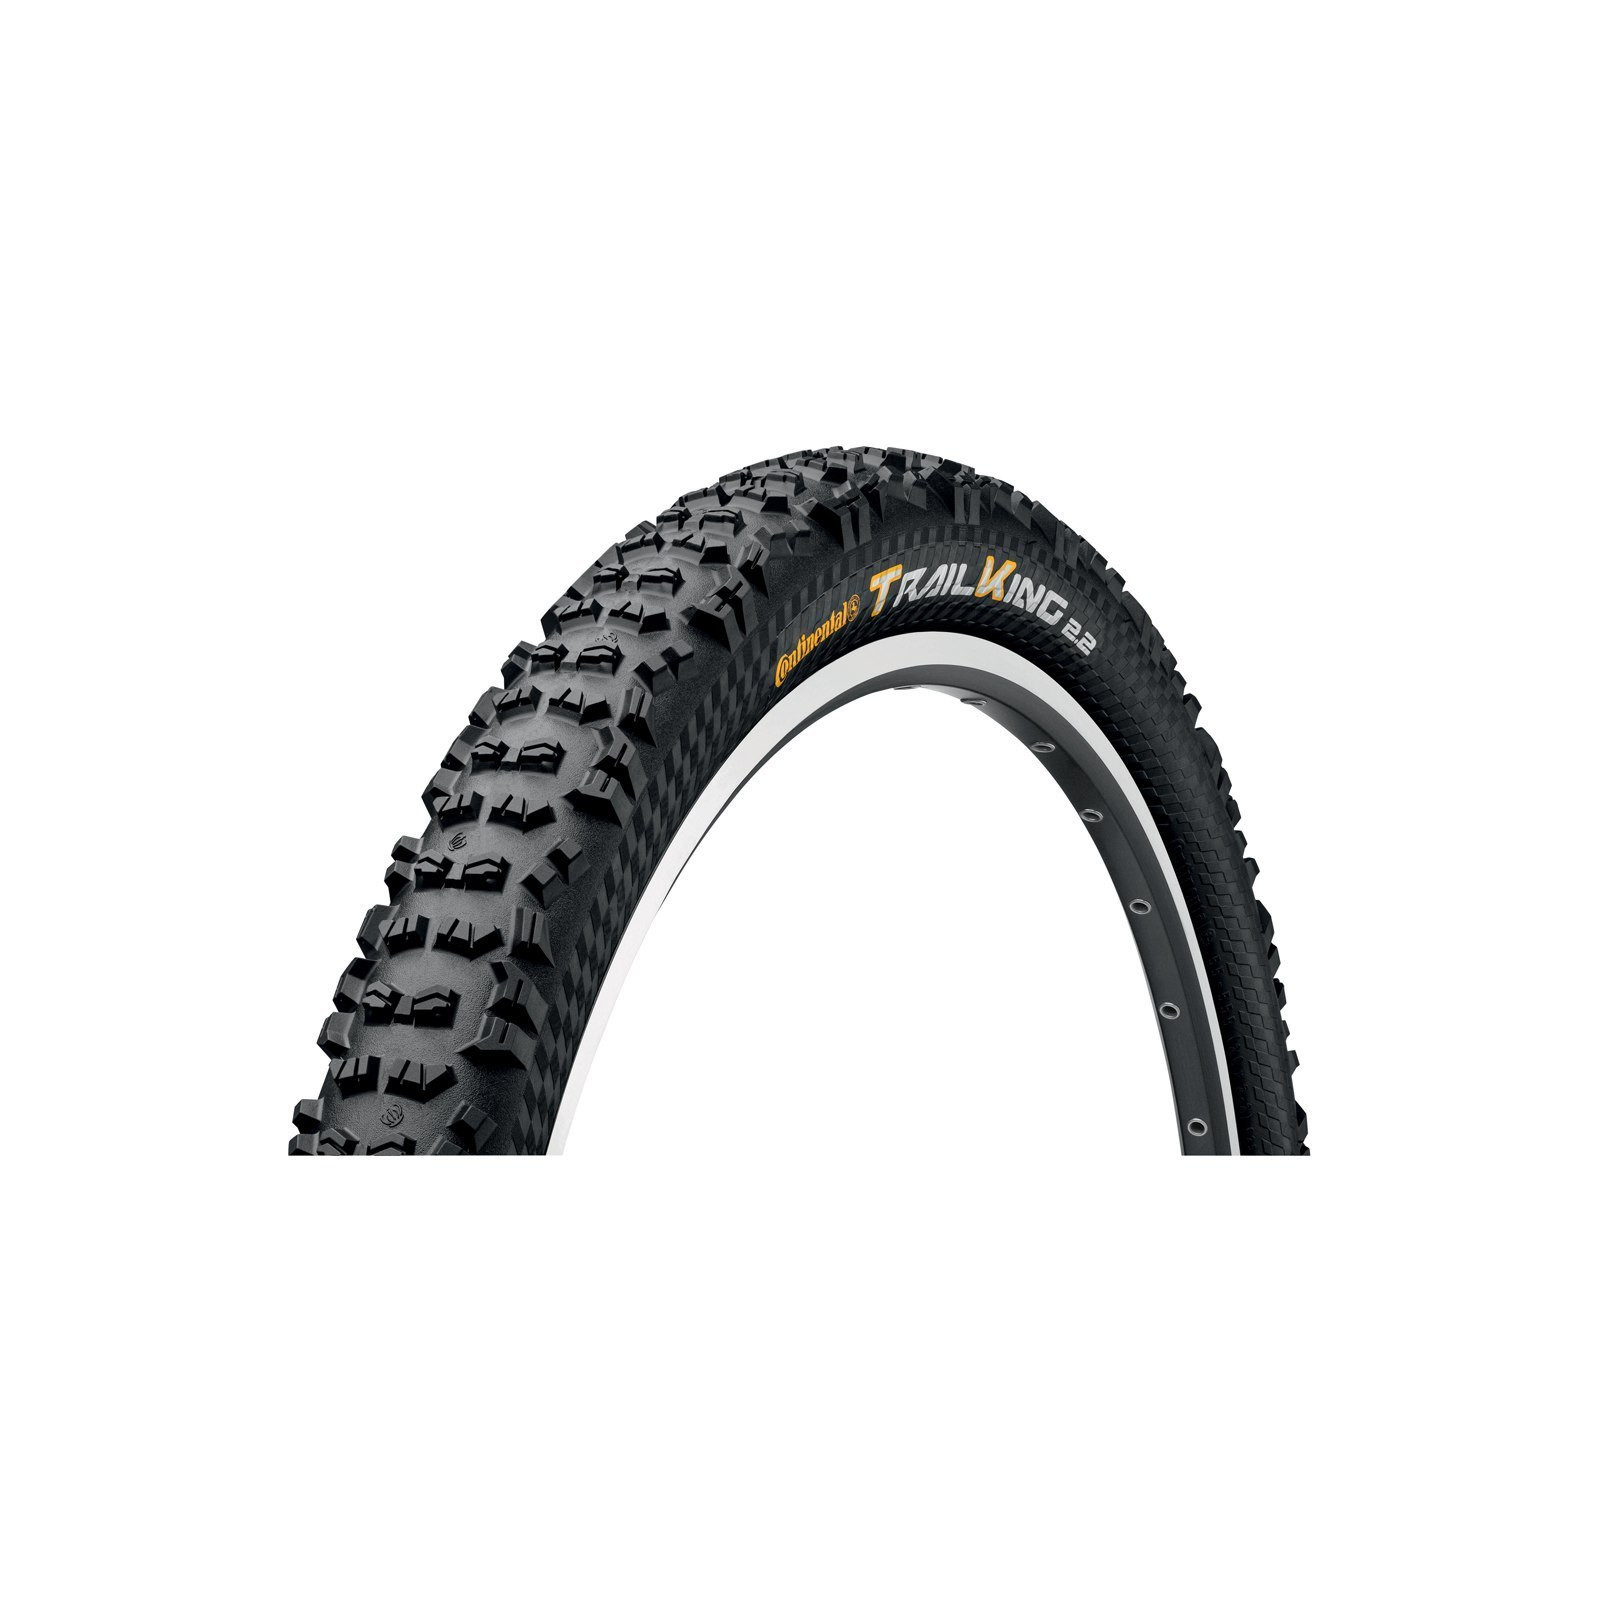 vingerafdruk Verstrooien Goneryl Continental Trail King ProTection + Apex MTB - Tire (F) - 26 x 2.4